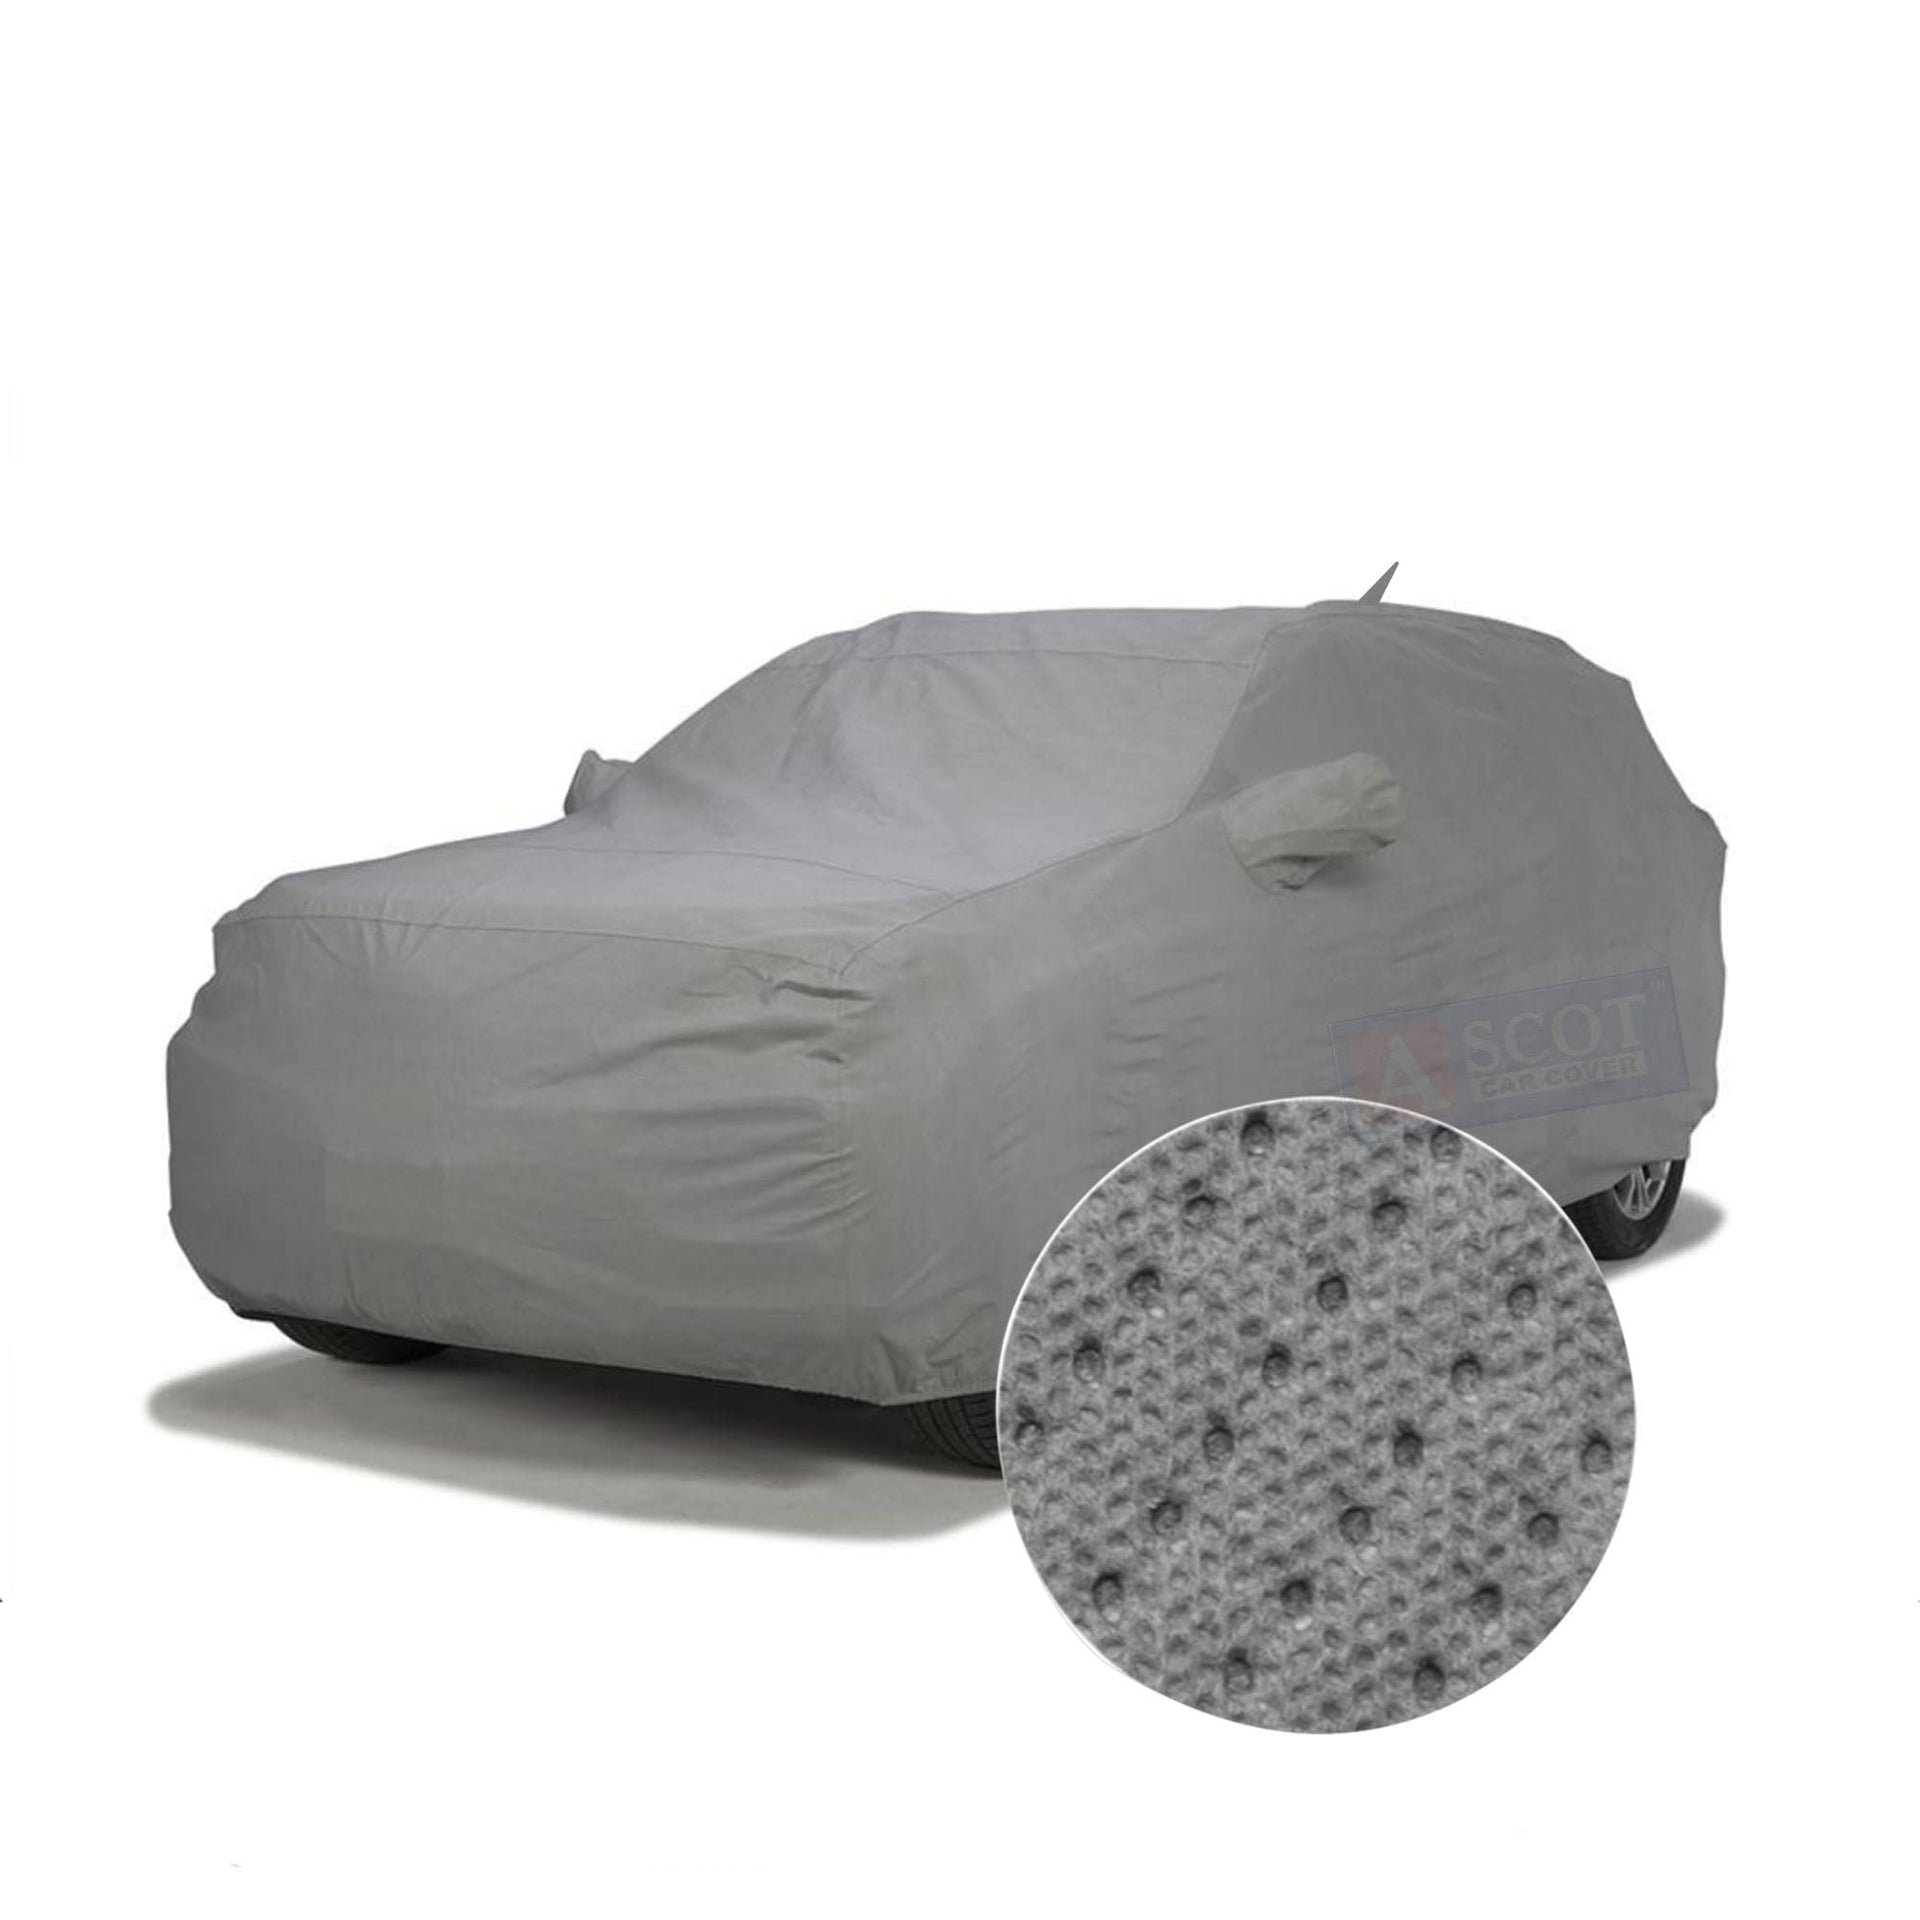 Audi q3 car cover waterproof with mirror pocket and anteena, car